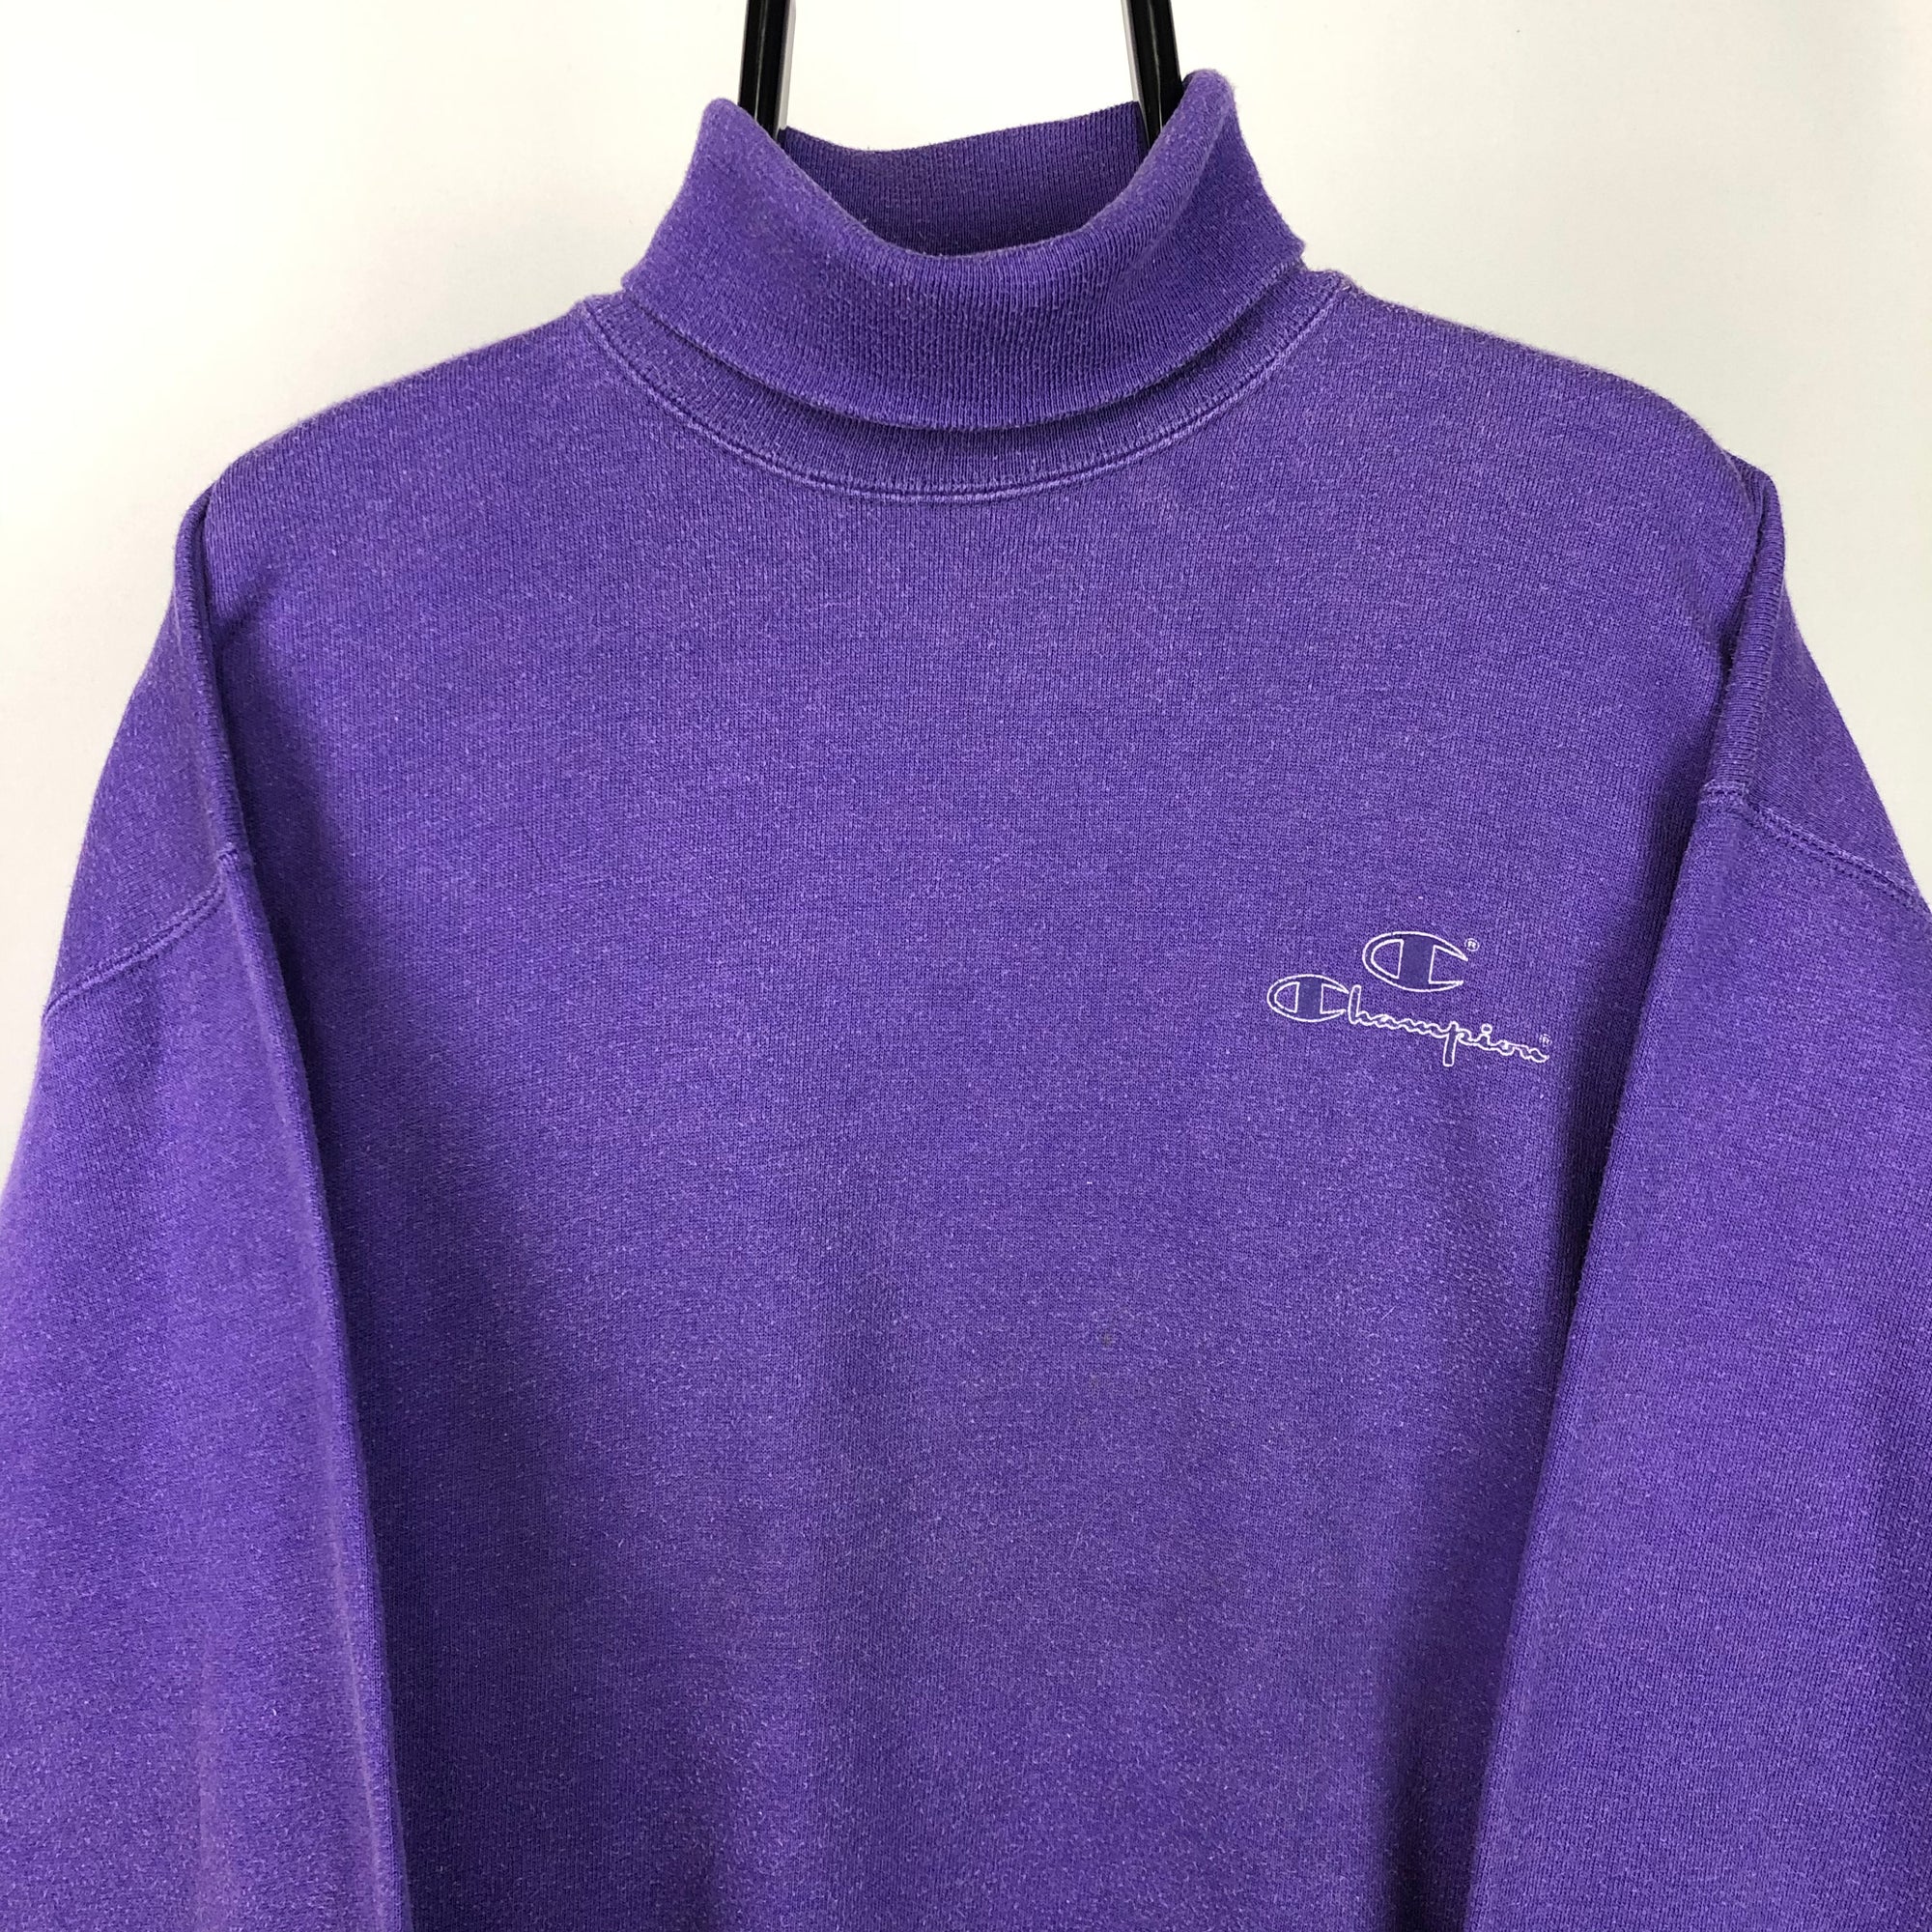 Vintage 80s Champion Roll Neck Sweatshirt in Purple - Men's Large/Women's XL